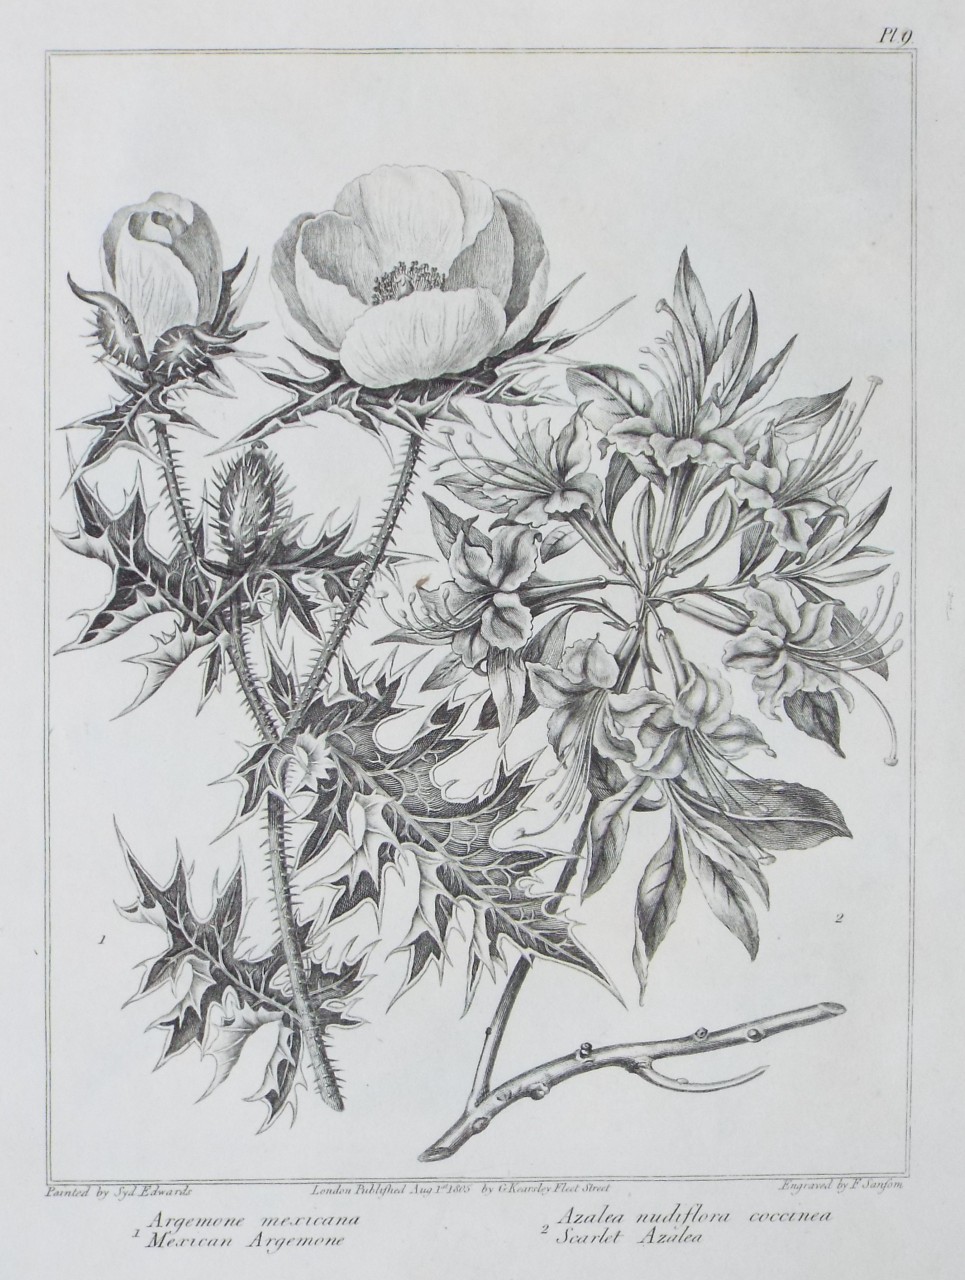 Print - 1 Argemone mexicana Mexican Argemone | 2 Azalea nudiflora coccinea Scarlet Azalea - Sansom